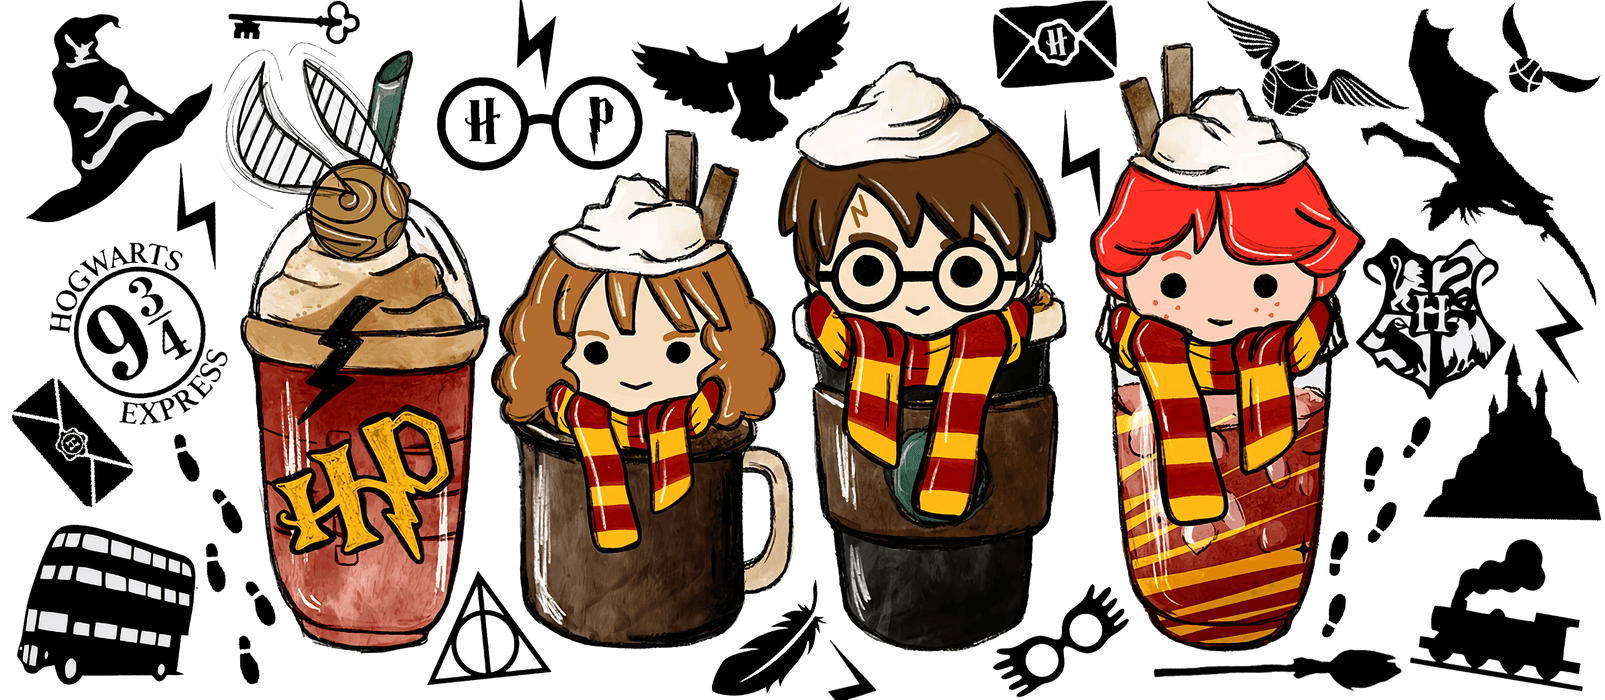 UV DTF 16 Oz Libbey Glass Cup Wrap - Harry Potter Hermione Granger Ron Weasley - DTF Center 